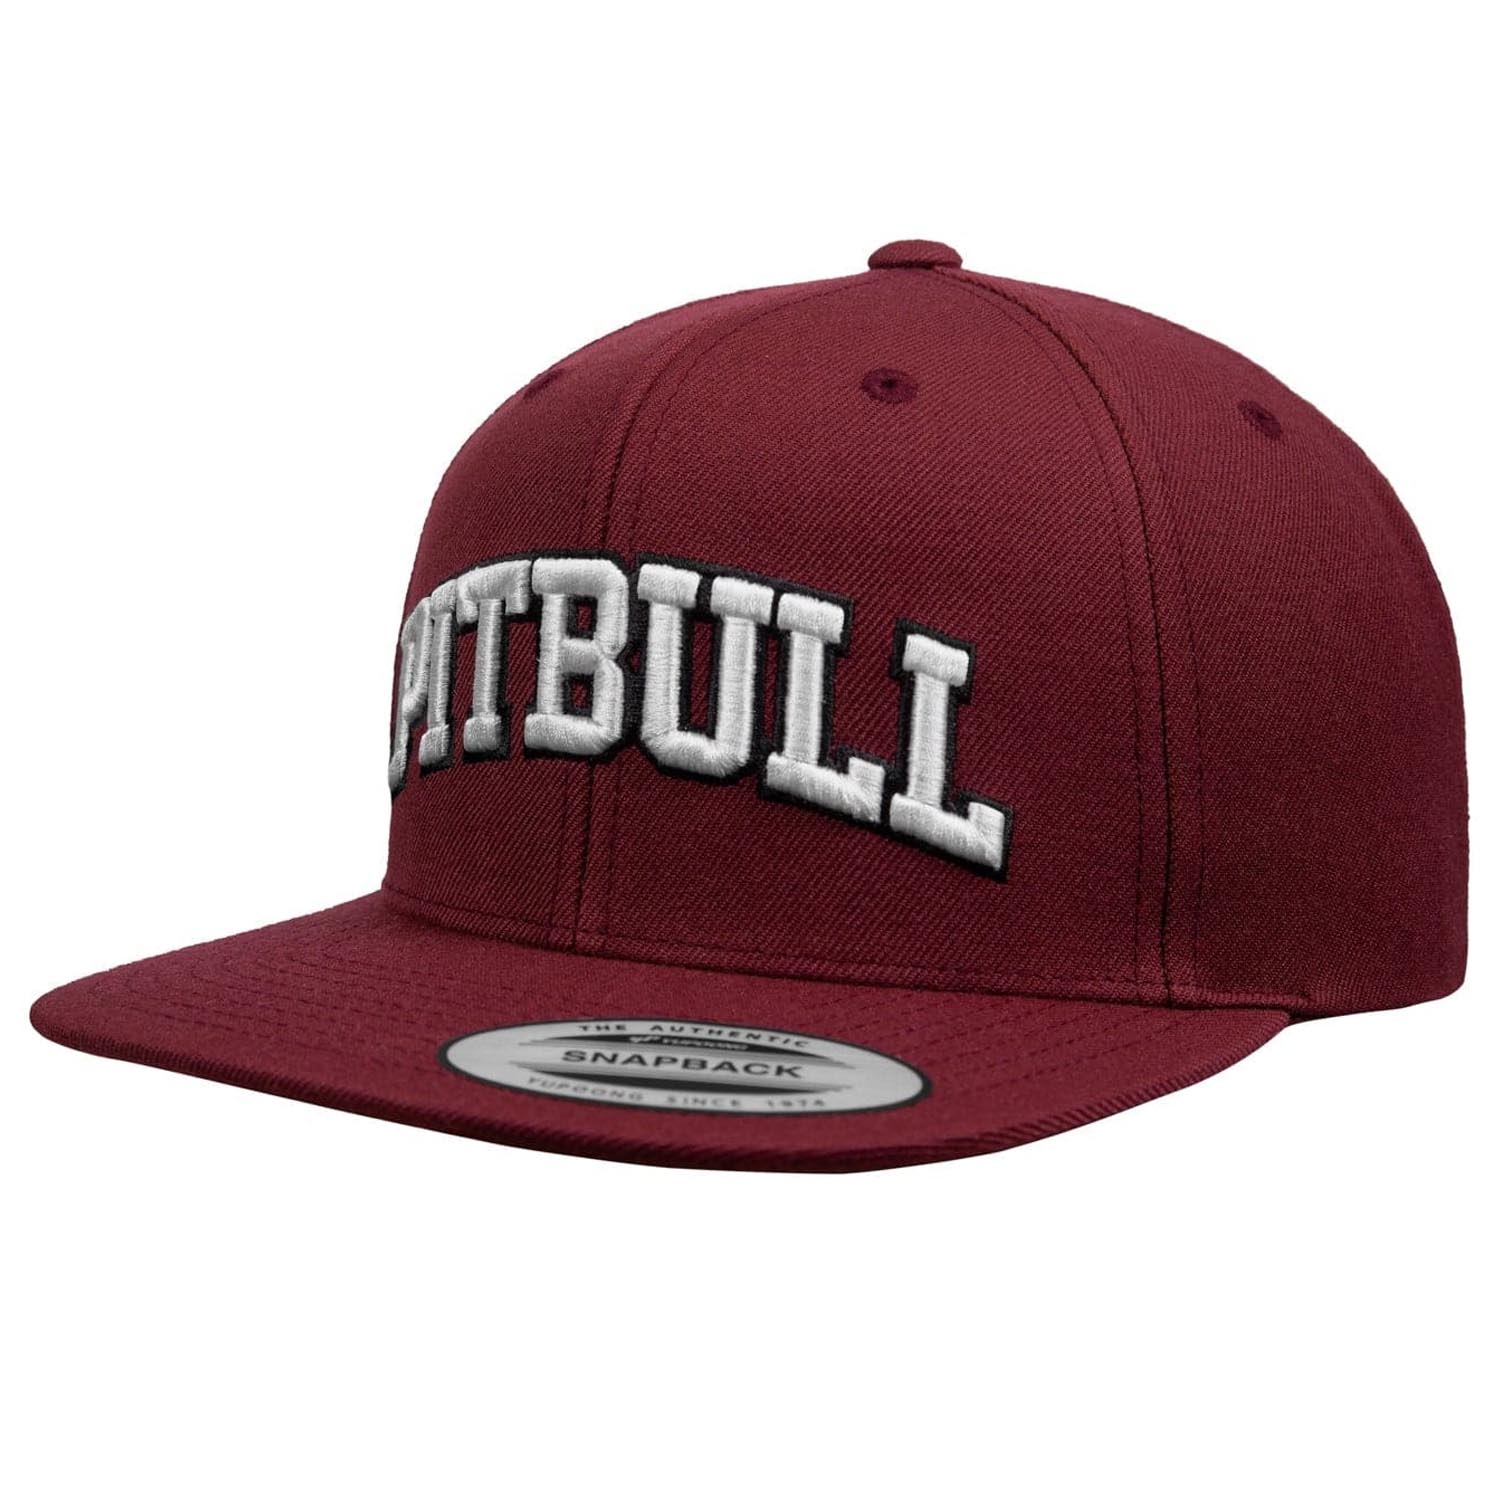 Pit Bull West Coast Snapback Cap, Pitbull YP Premium, weinrot